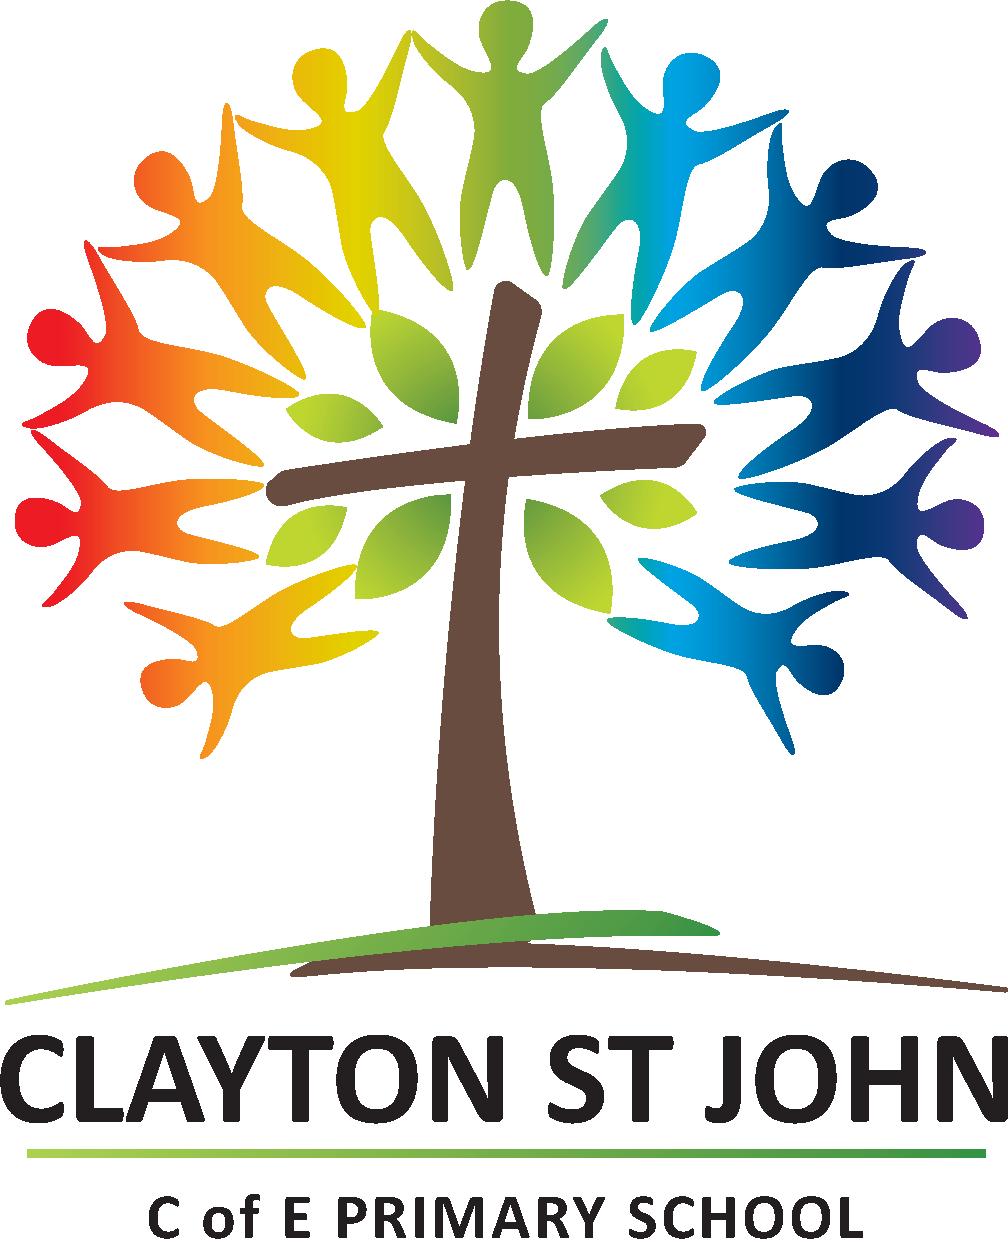 Clayton St John CofE Primary School logo